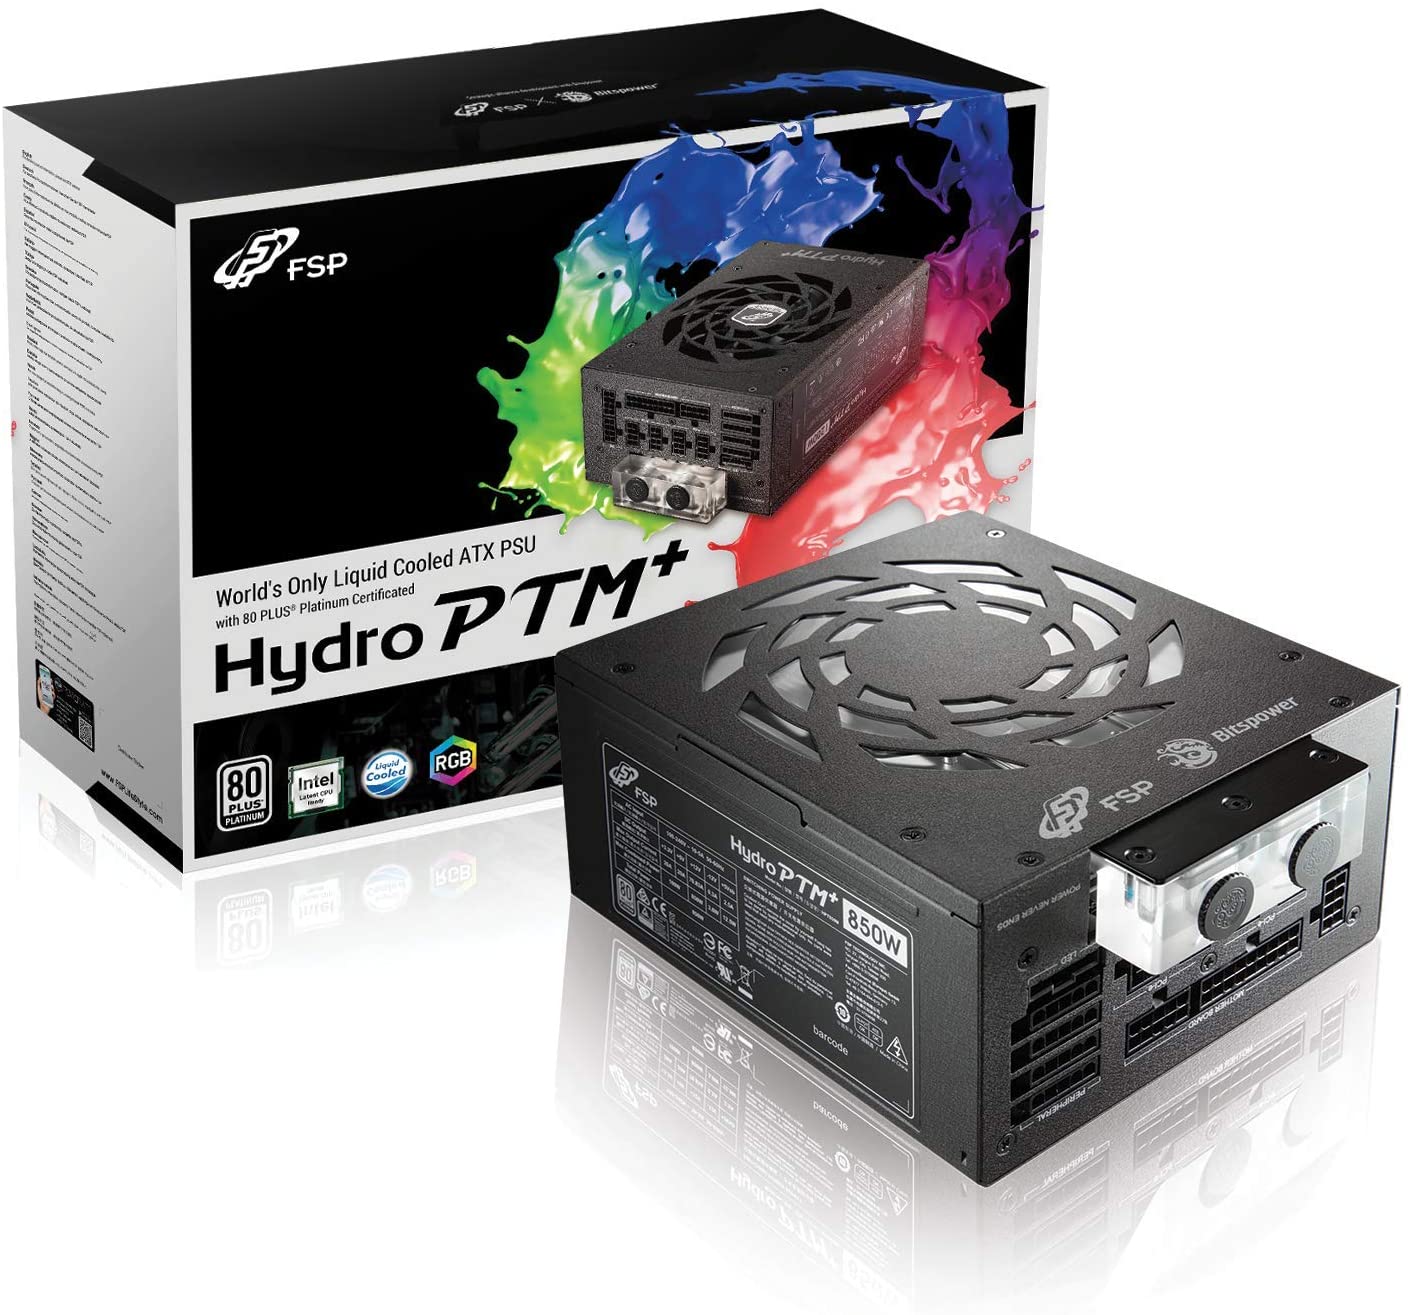 FSP 850W Hydro PTM+ RGB Fully Modular 80Plus Platinum PSU - Store 974 | ستور ٩٧٤